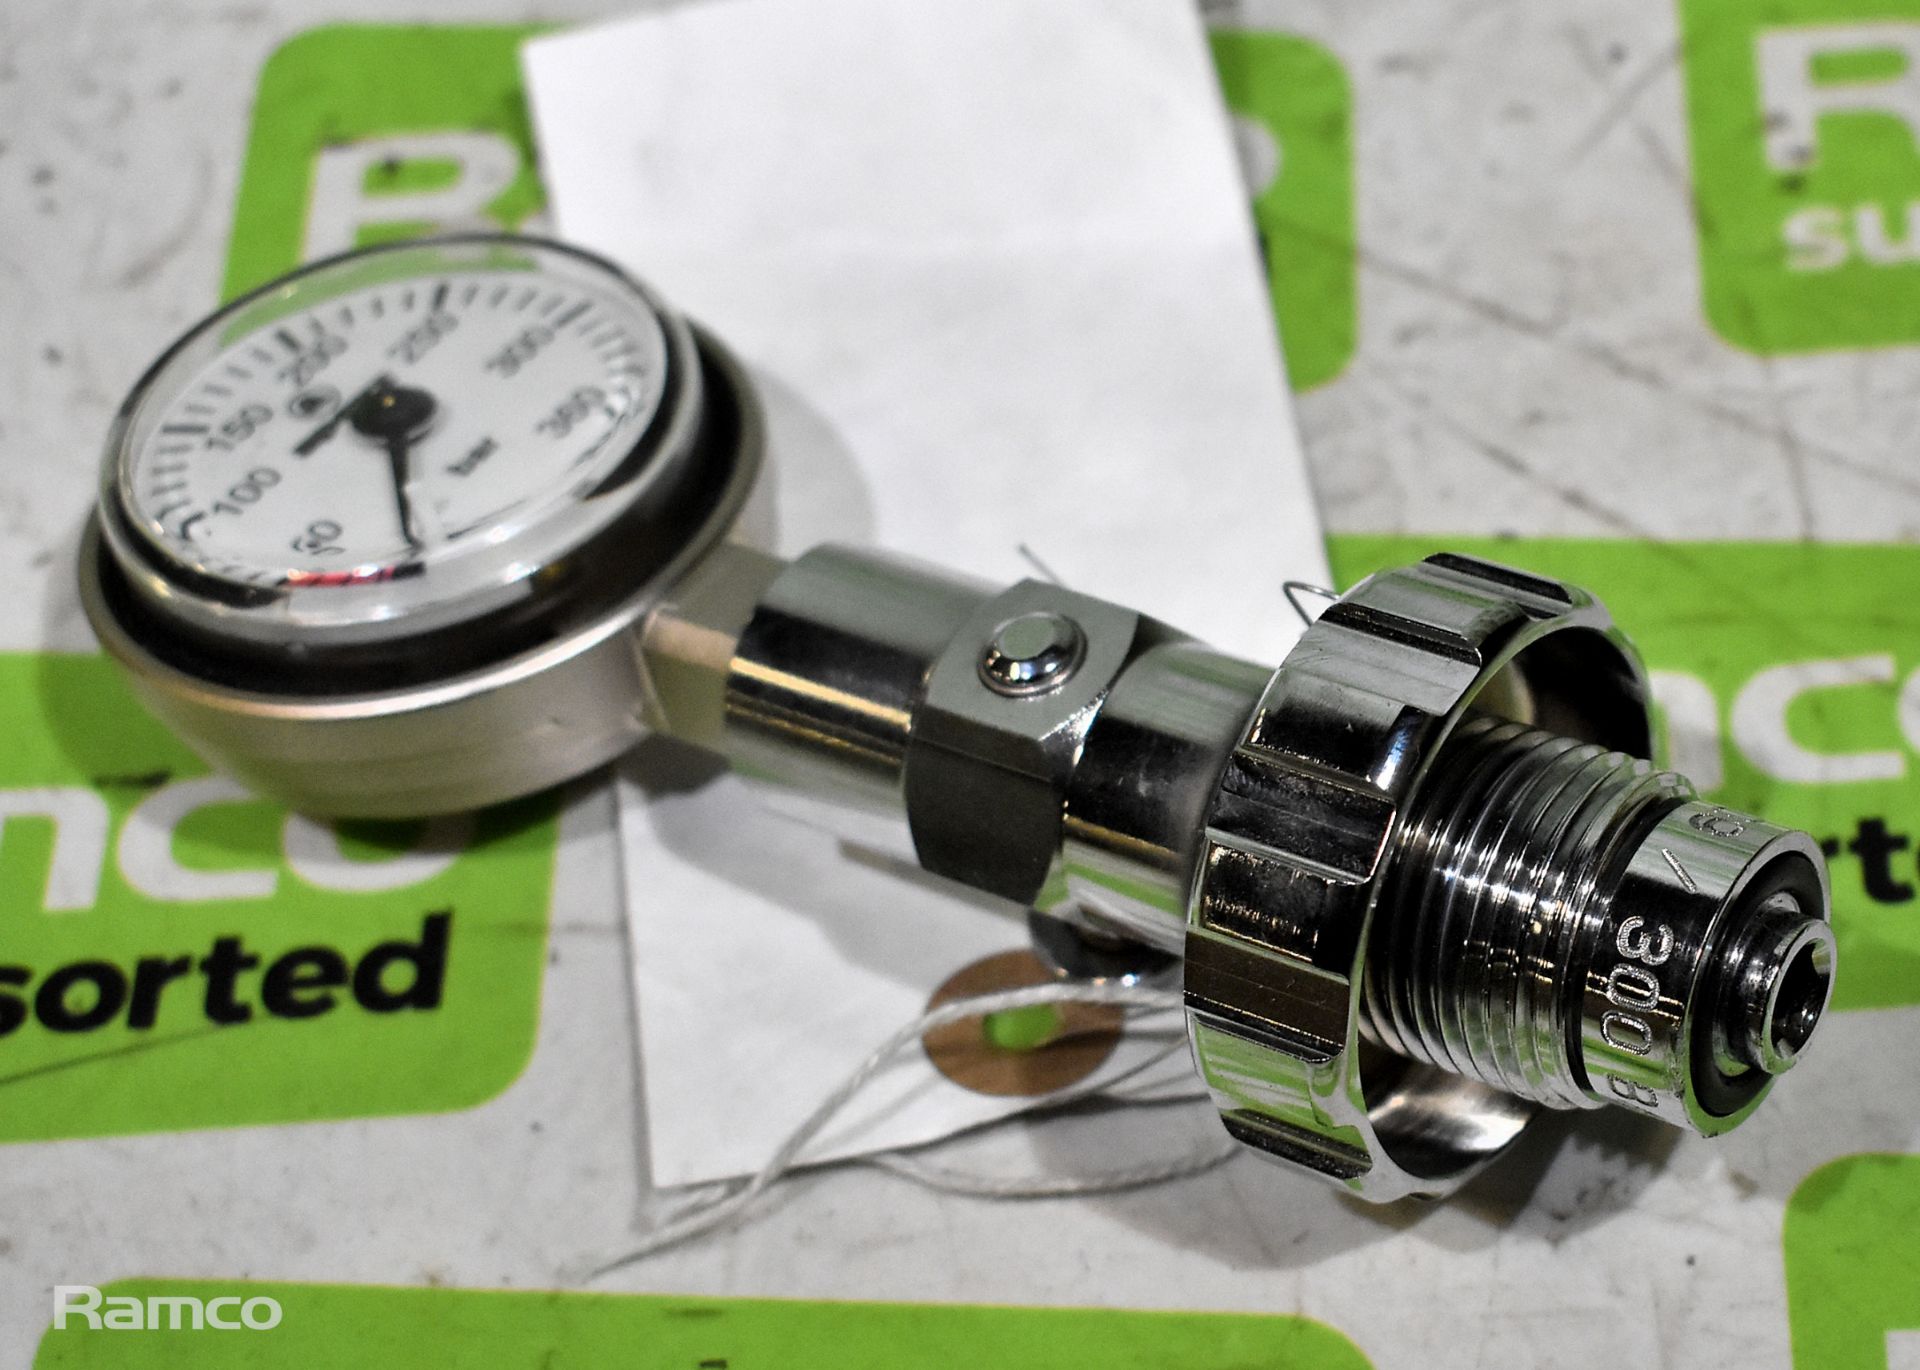 Apeks pressure gauge - cylinder pressure tester - zero to 360 bar dial - Image 3 of 3